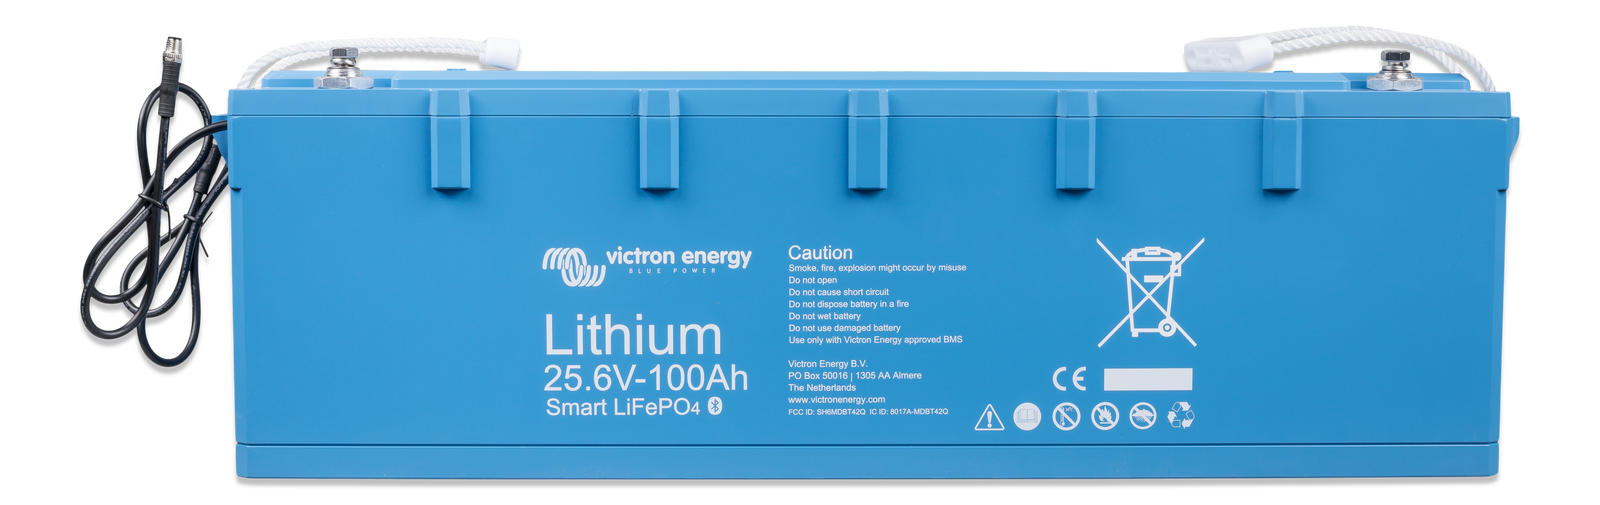 Victron Energy - Ecobat Battery